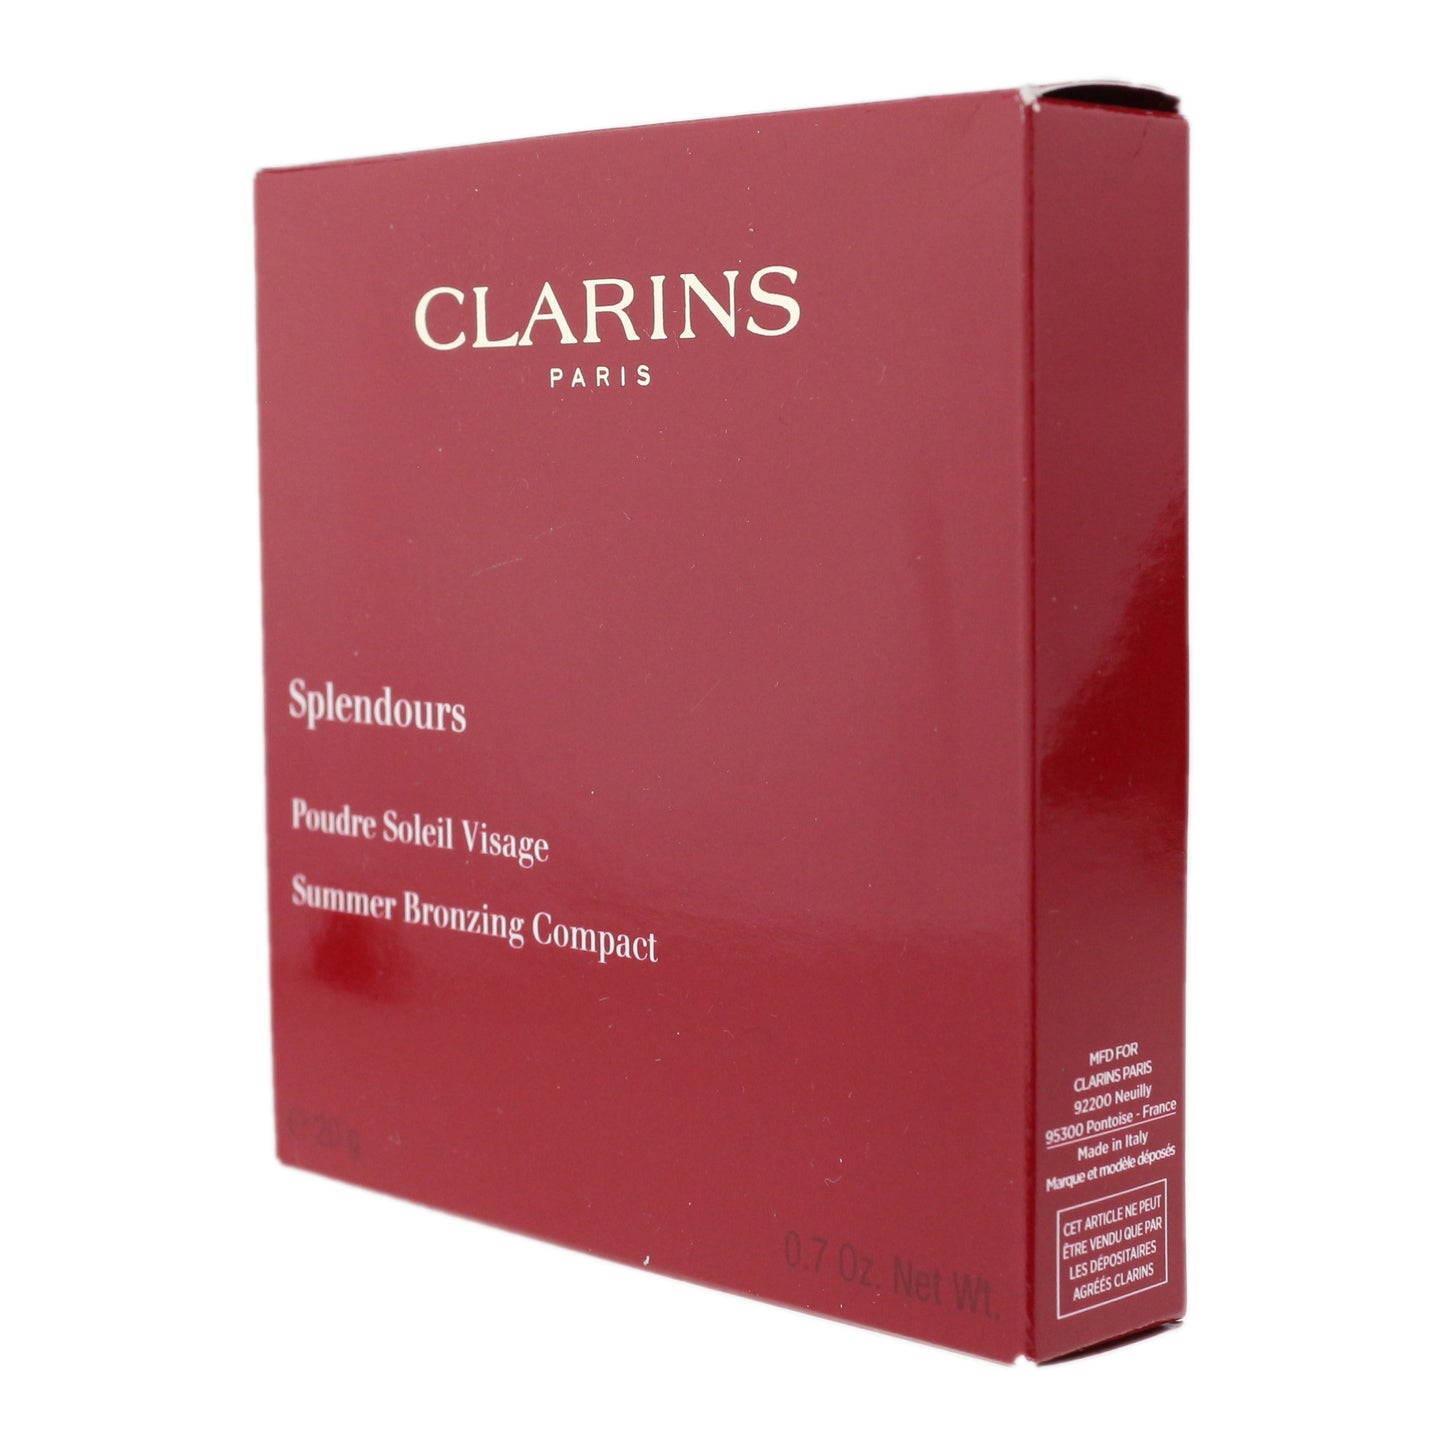 Clarins Splendours Summer Bronzing Compact 0.7Oz/20g New In Box